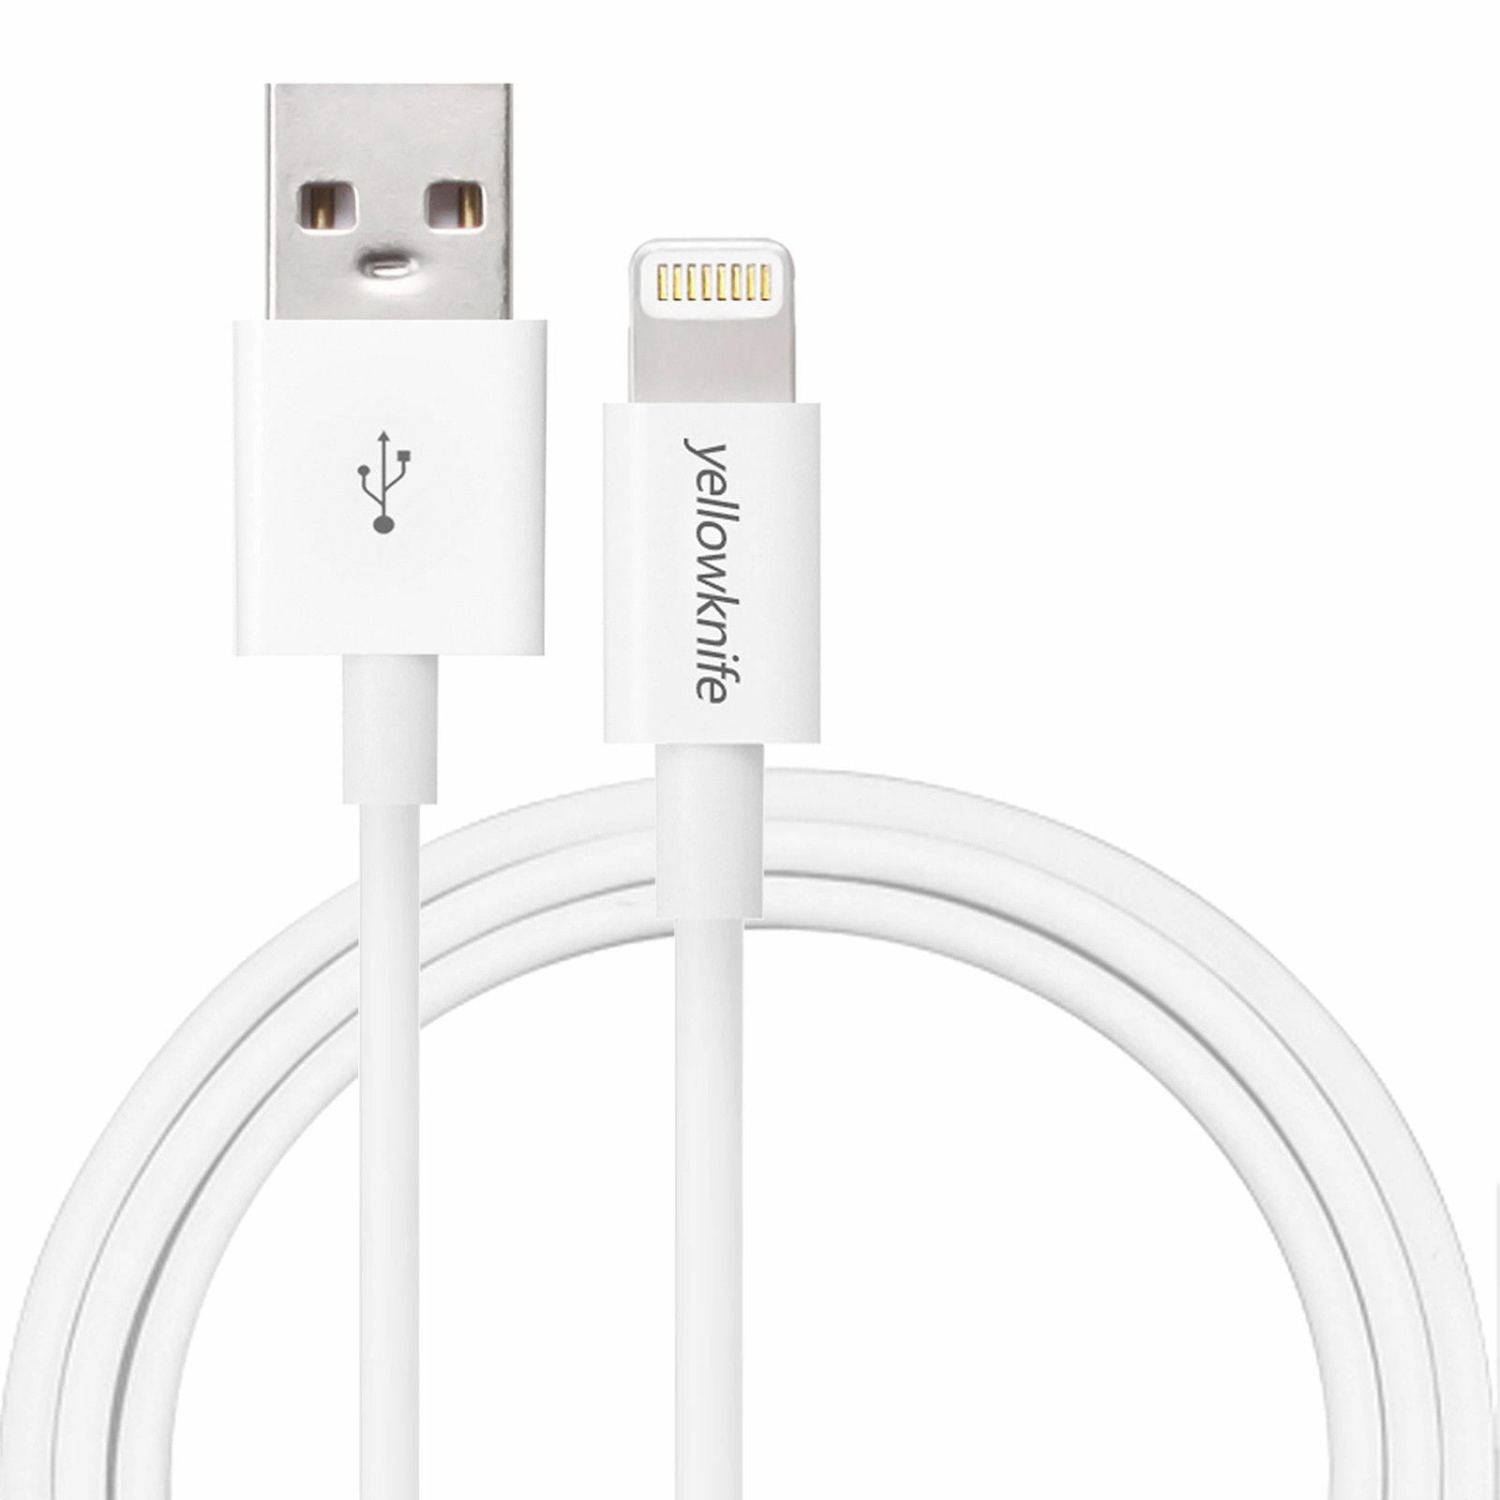 Apple MFi Certified for iPad Air iPad Mini iPad Pro Lightning Charger USB Cable